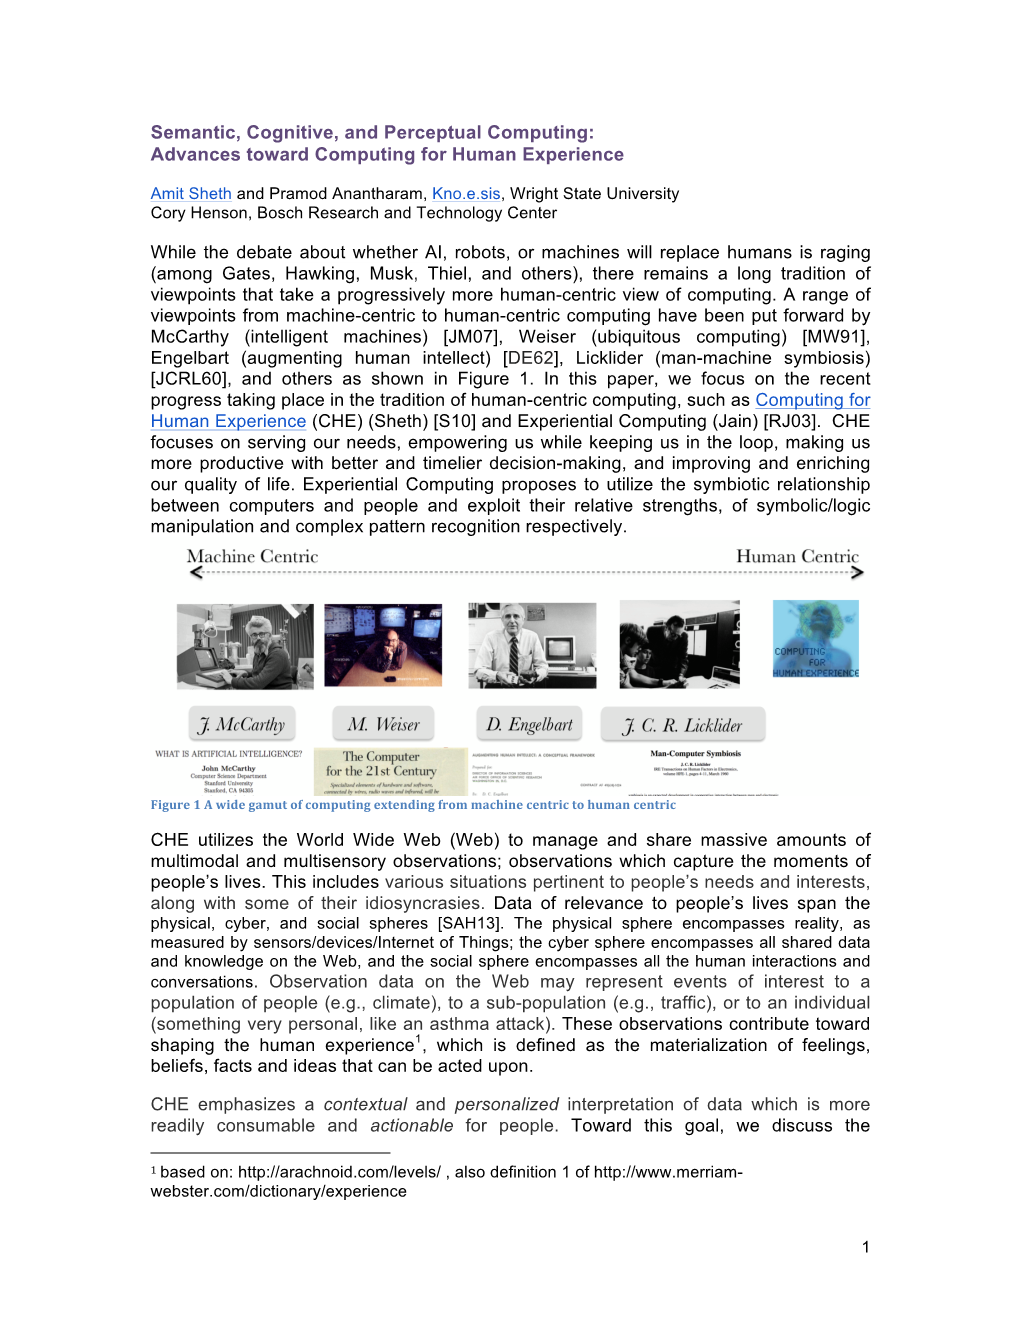 Semantic, Cognitive, and Perceptual Computing: Advances Toward Computing for Human Experience